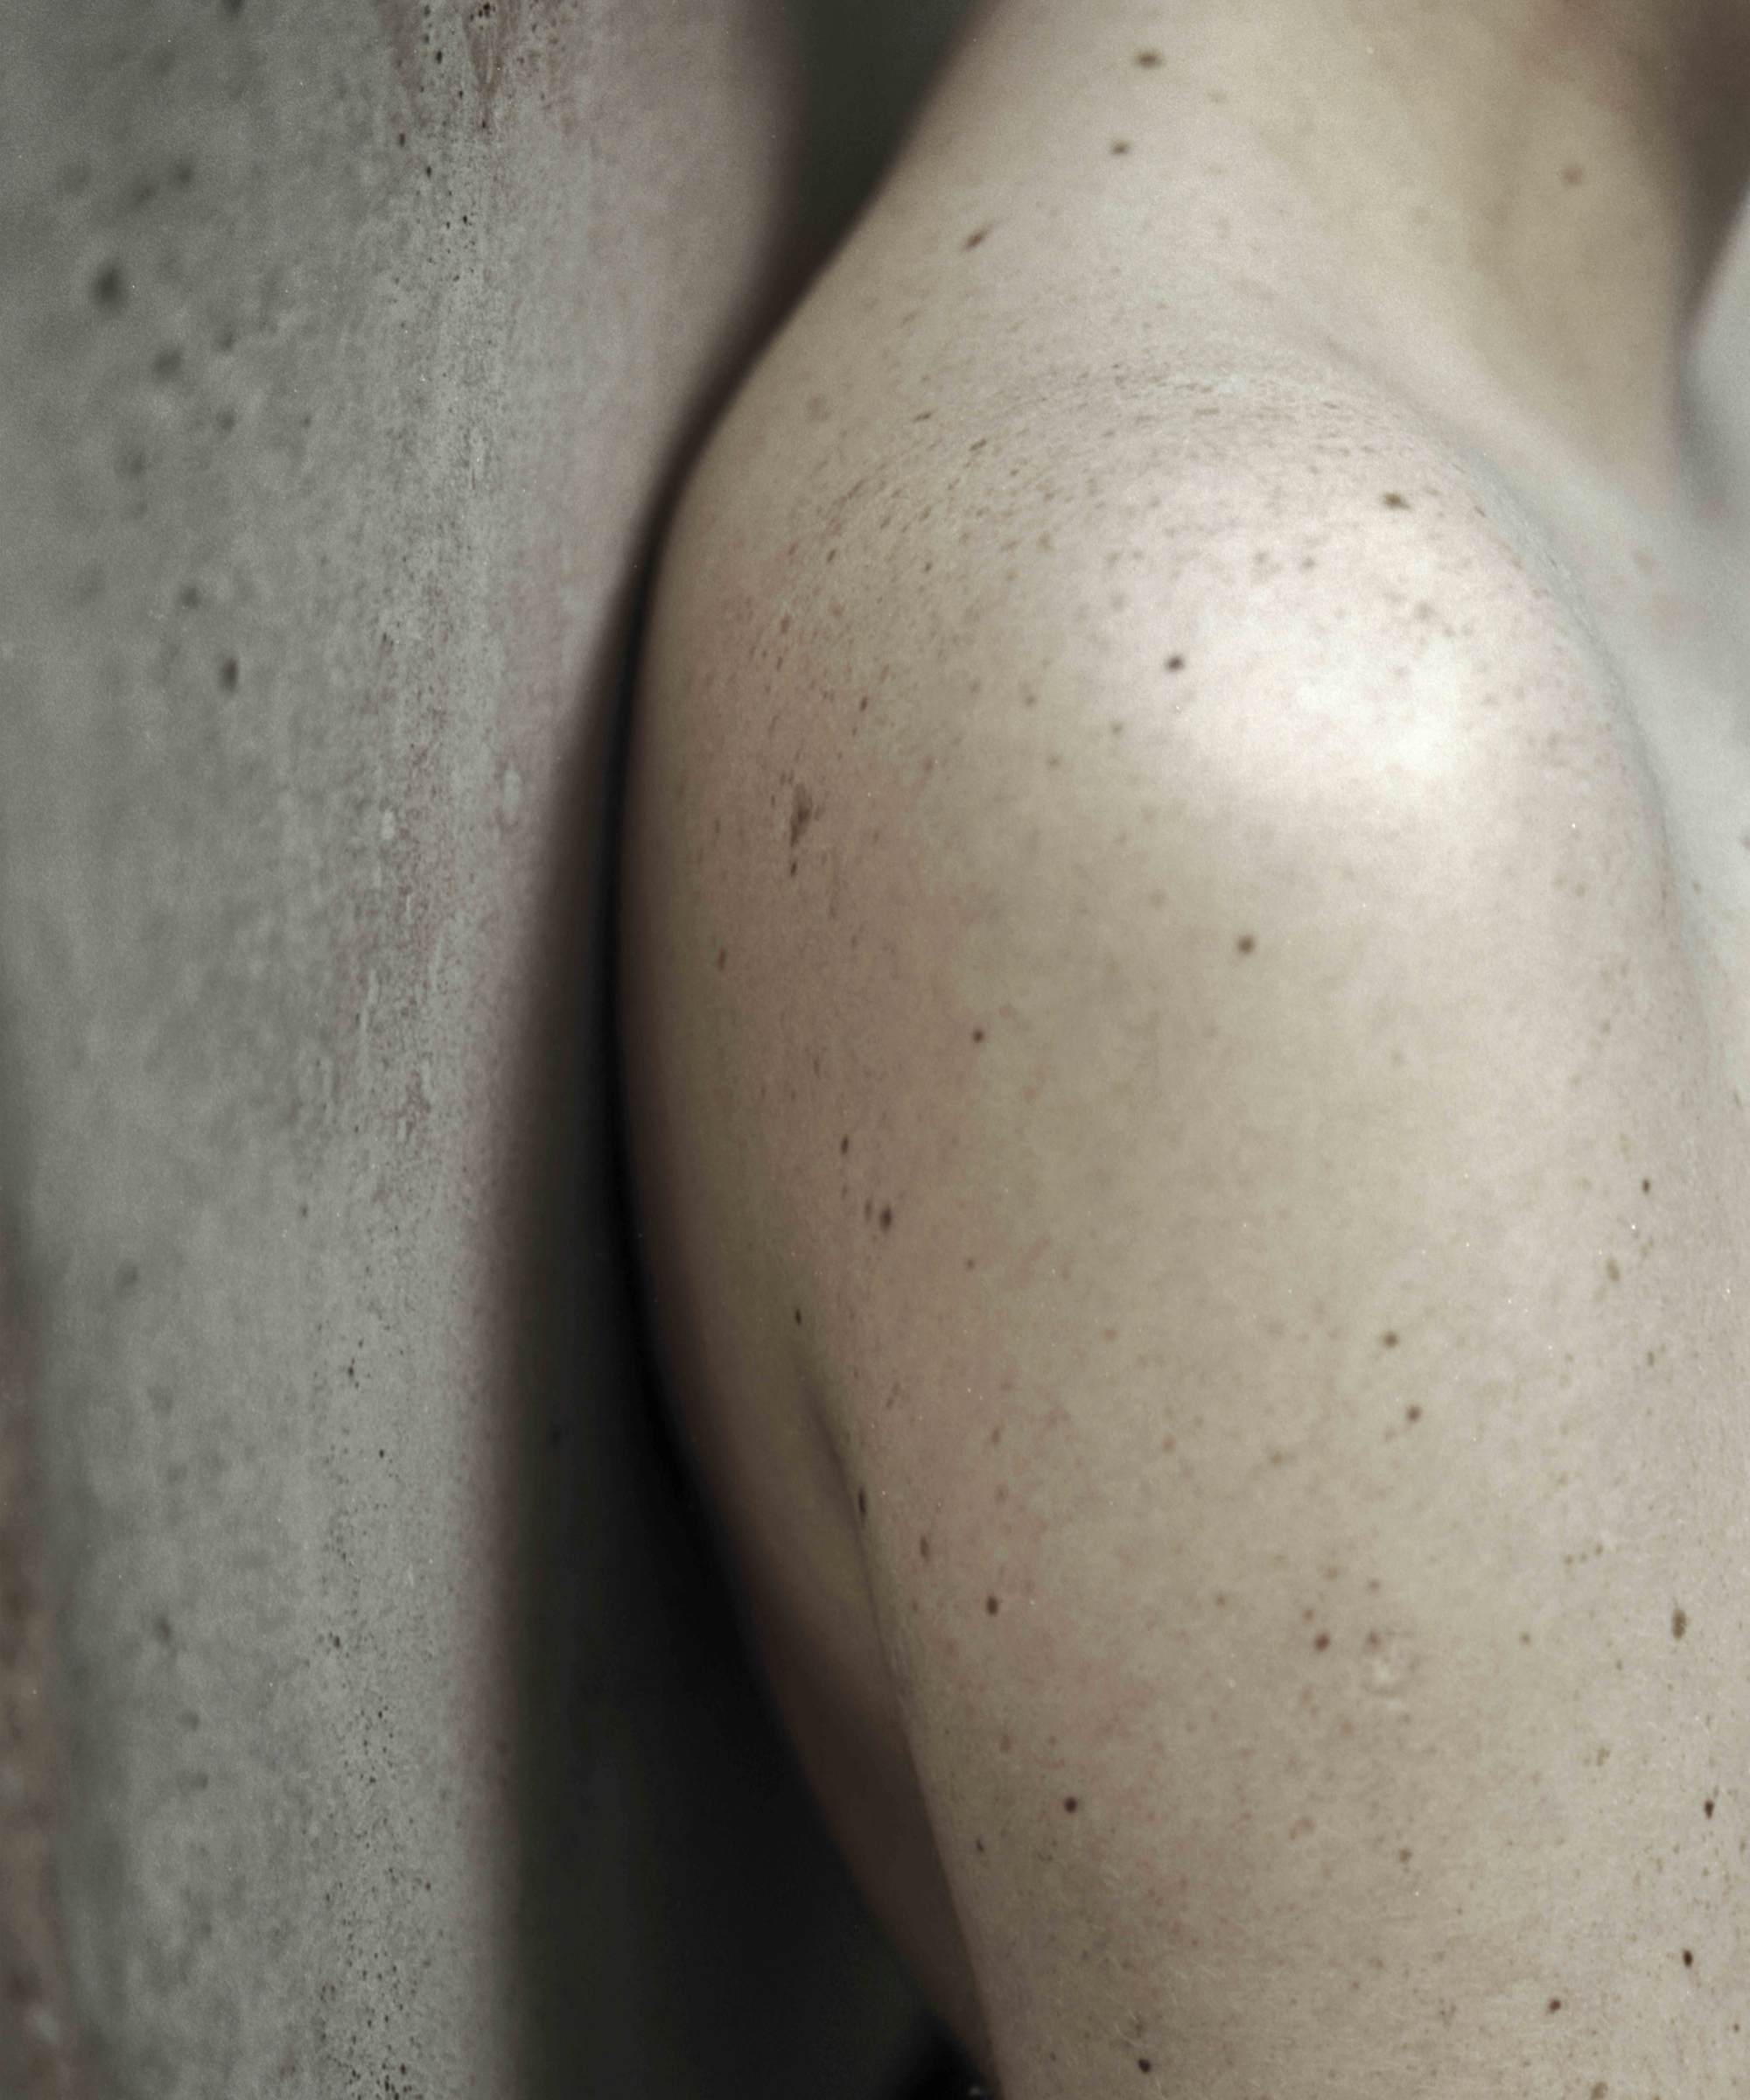 Import Export, Mia Dudek, Untitled I (skin studies), 2015